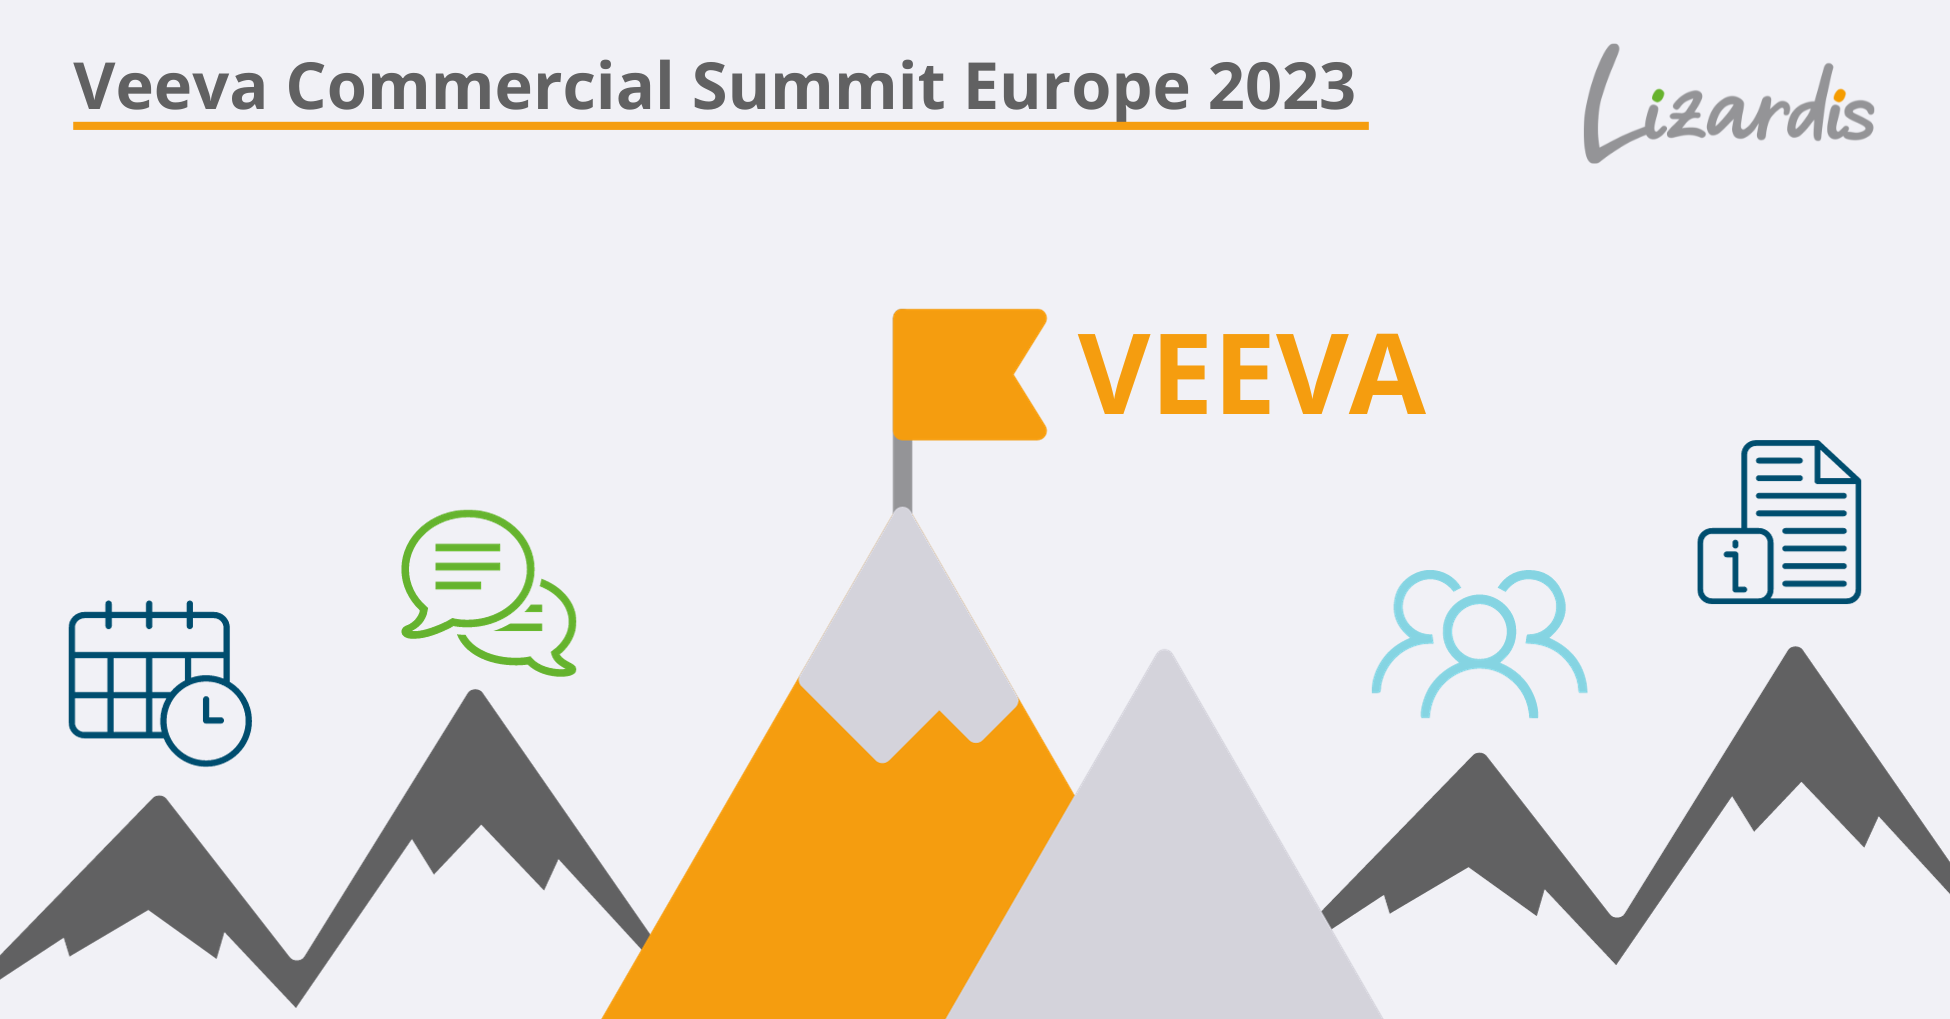 Veeva Commercial Summit Europe 2023